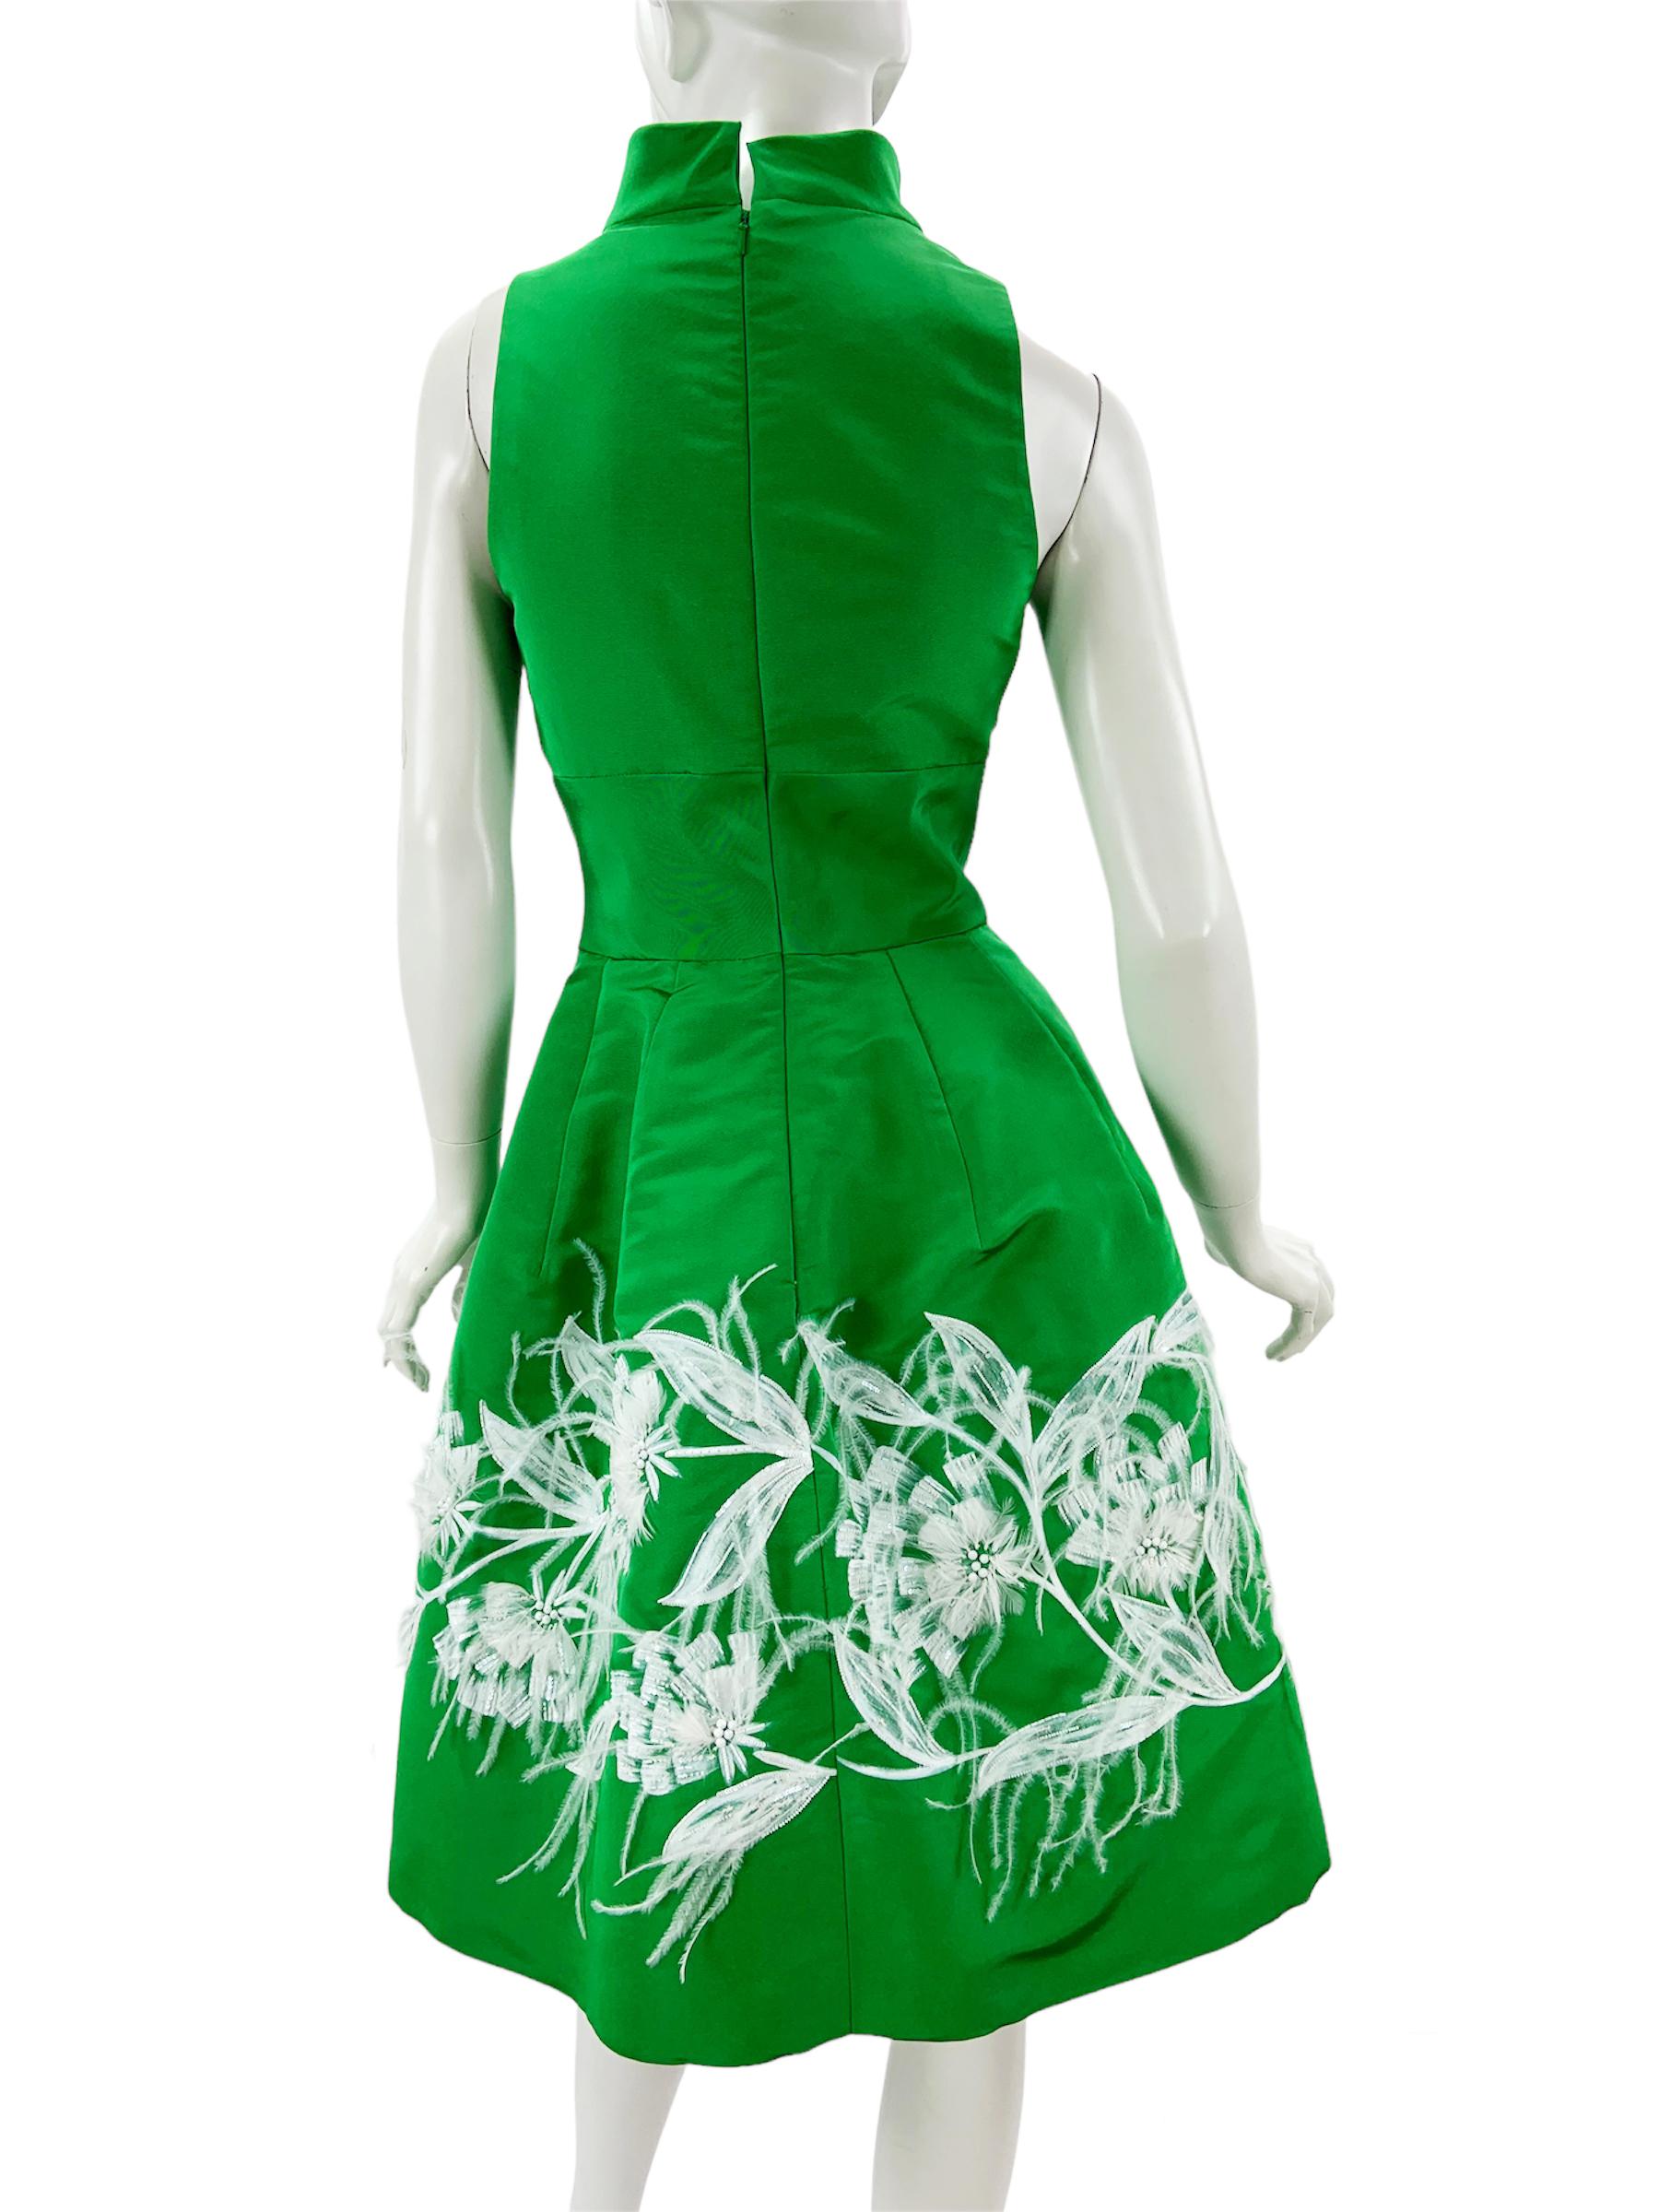 NWT Oscar de la Renta $5490 S/S 2015 Green Silk Taffeta Feather Beads Dress US 6 In New Condition For Sale In Montgomery, TX